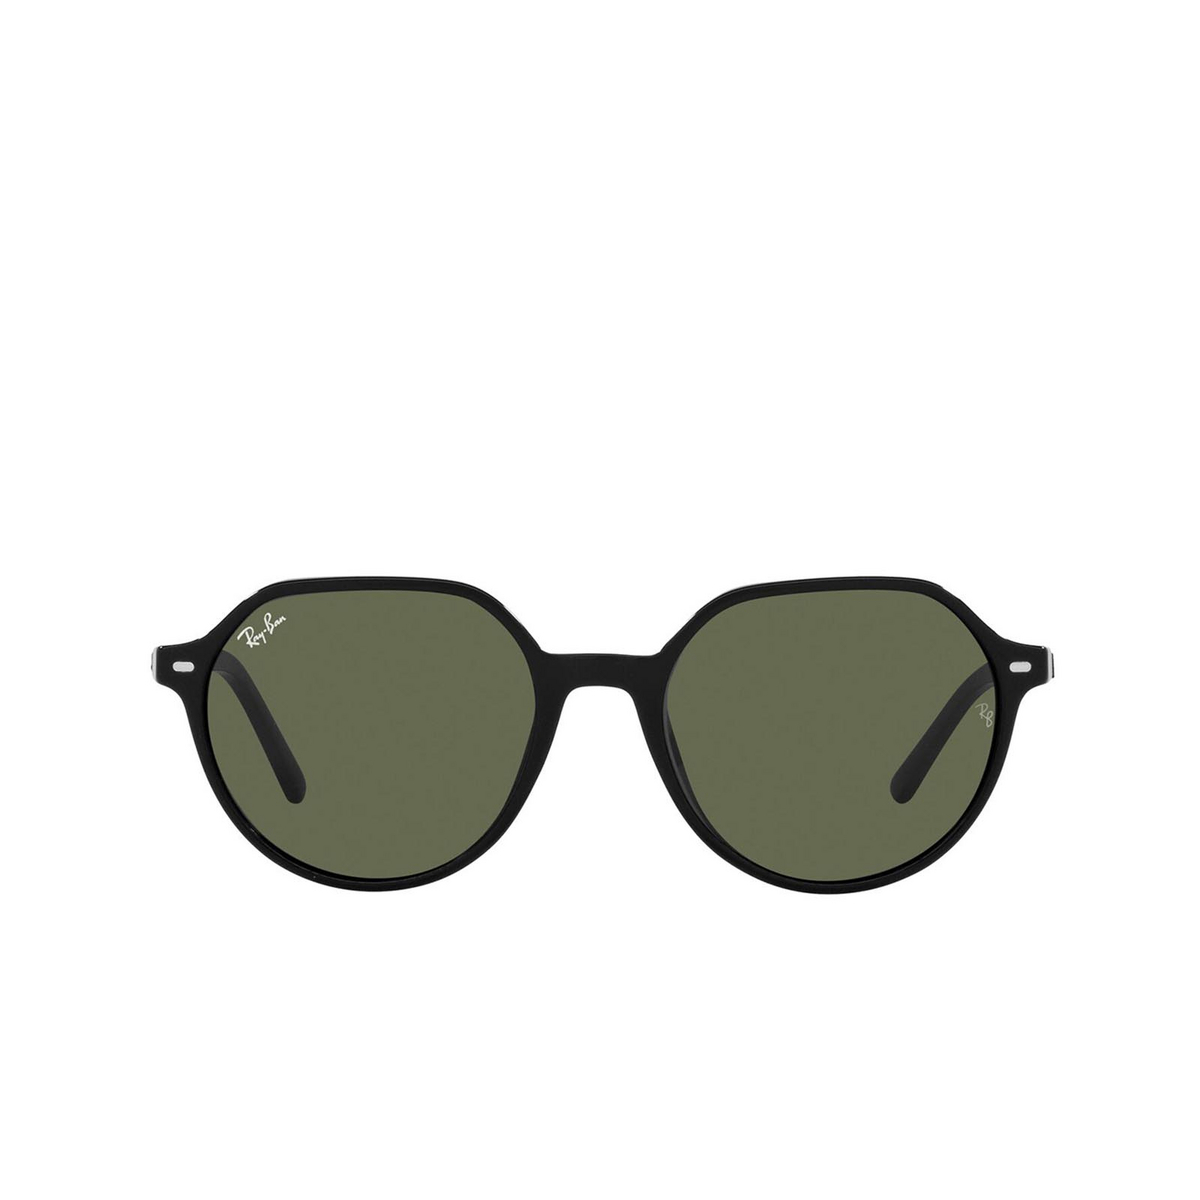 Ray-Ban THALIA Sunglasses 901/31 Black - front view